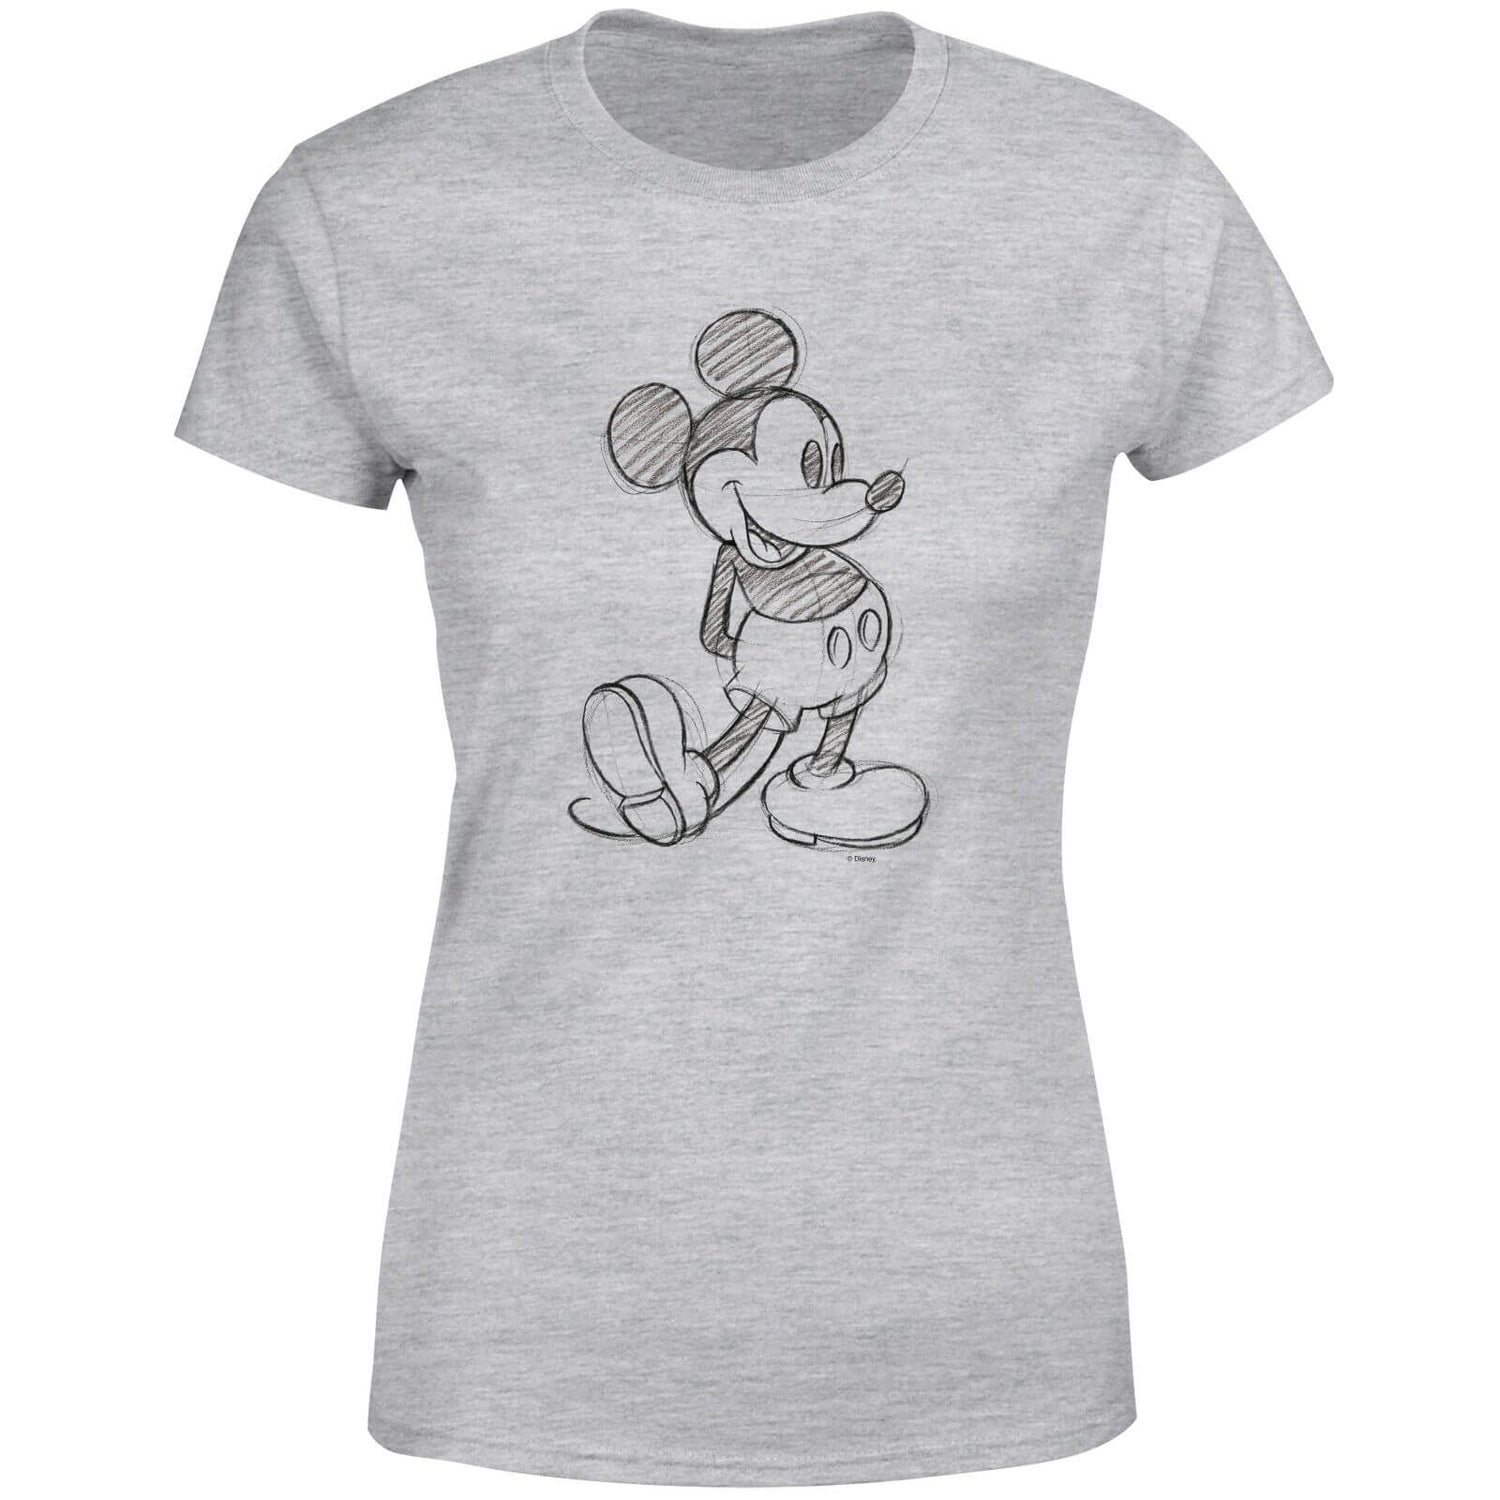 Disney Mickey Mouse Sketch Women's T-Shirt - Grey